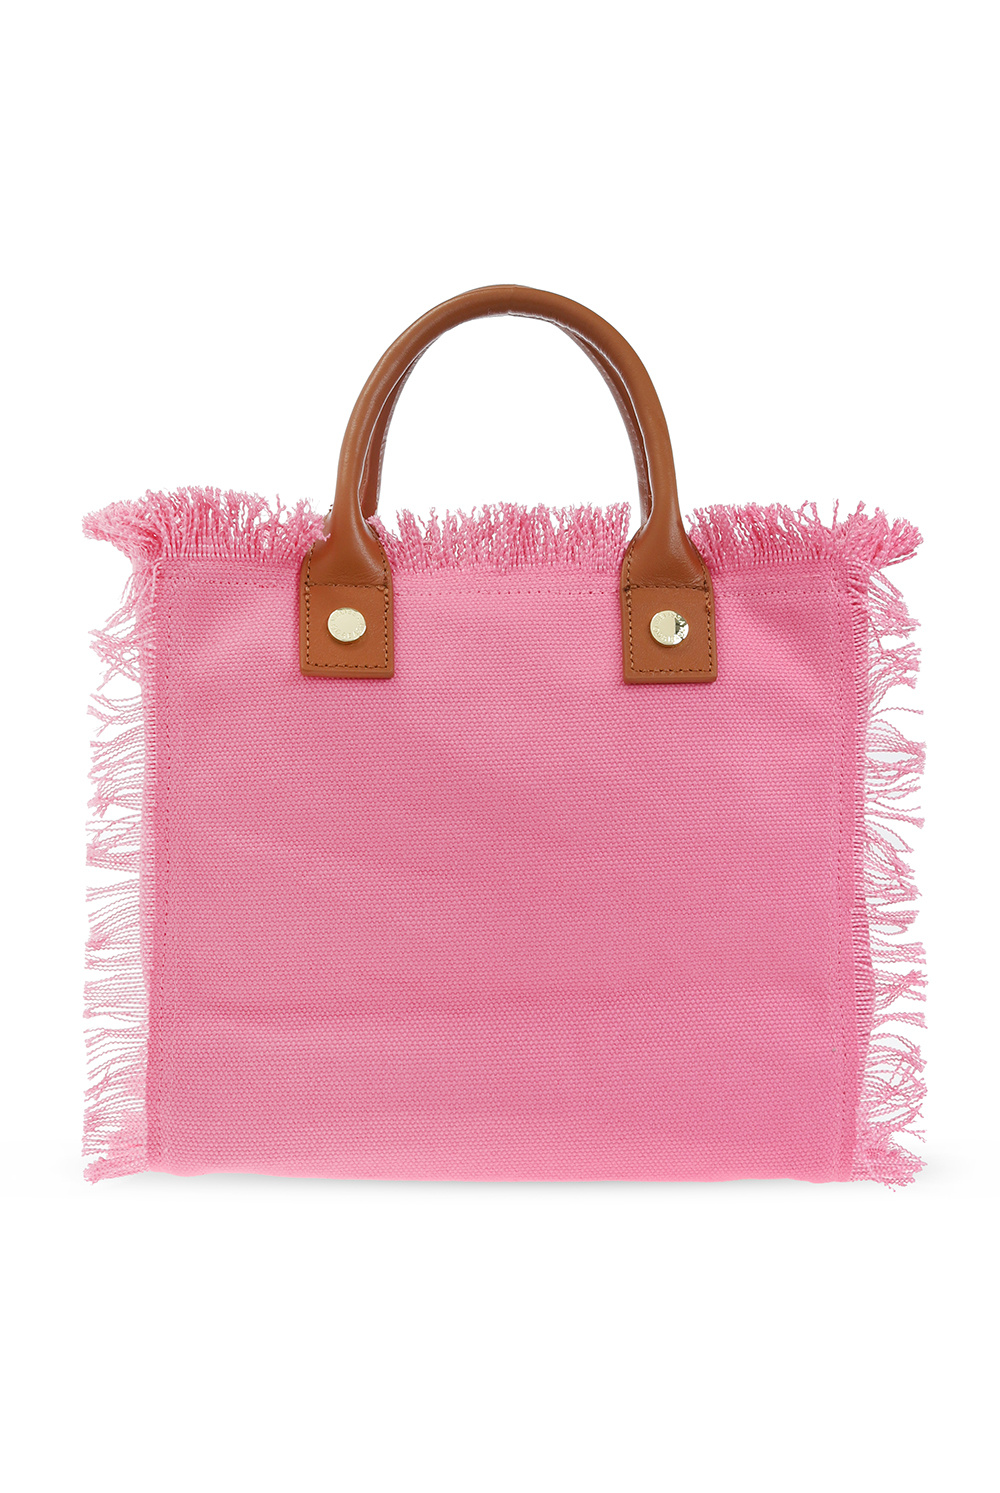 Melissa Odabash ‘Porto Cervo Mini’ shopper doccasion bag